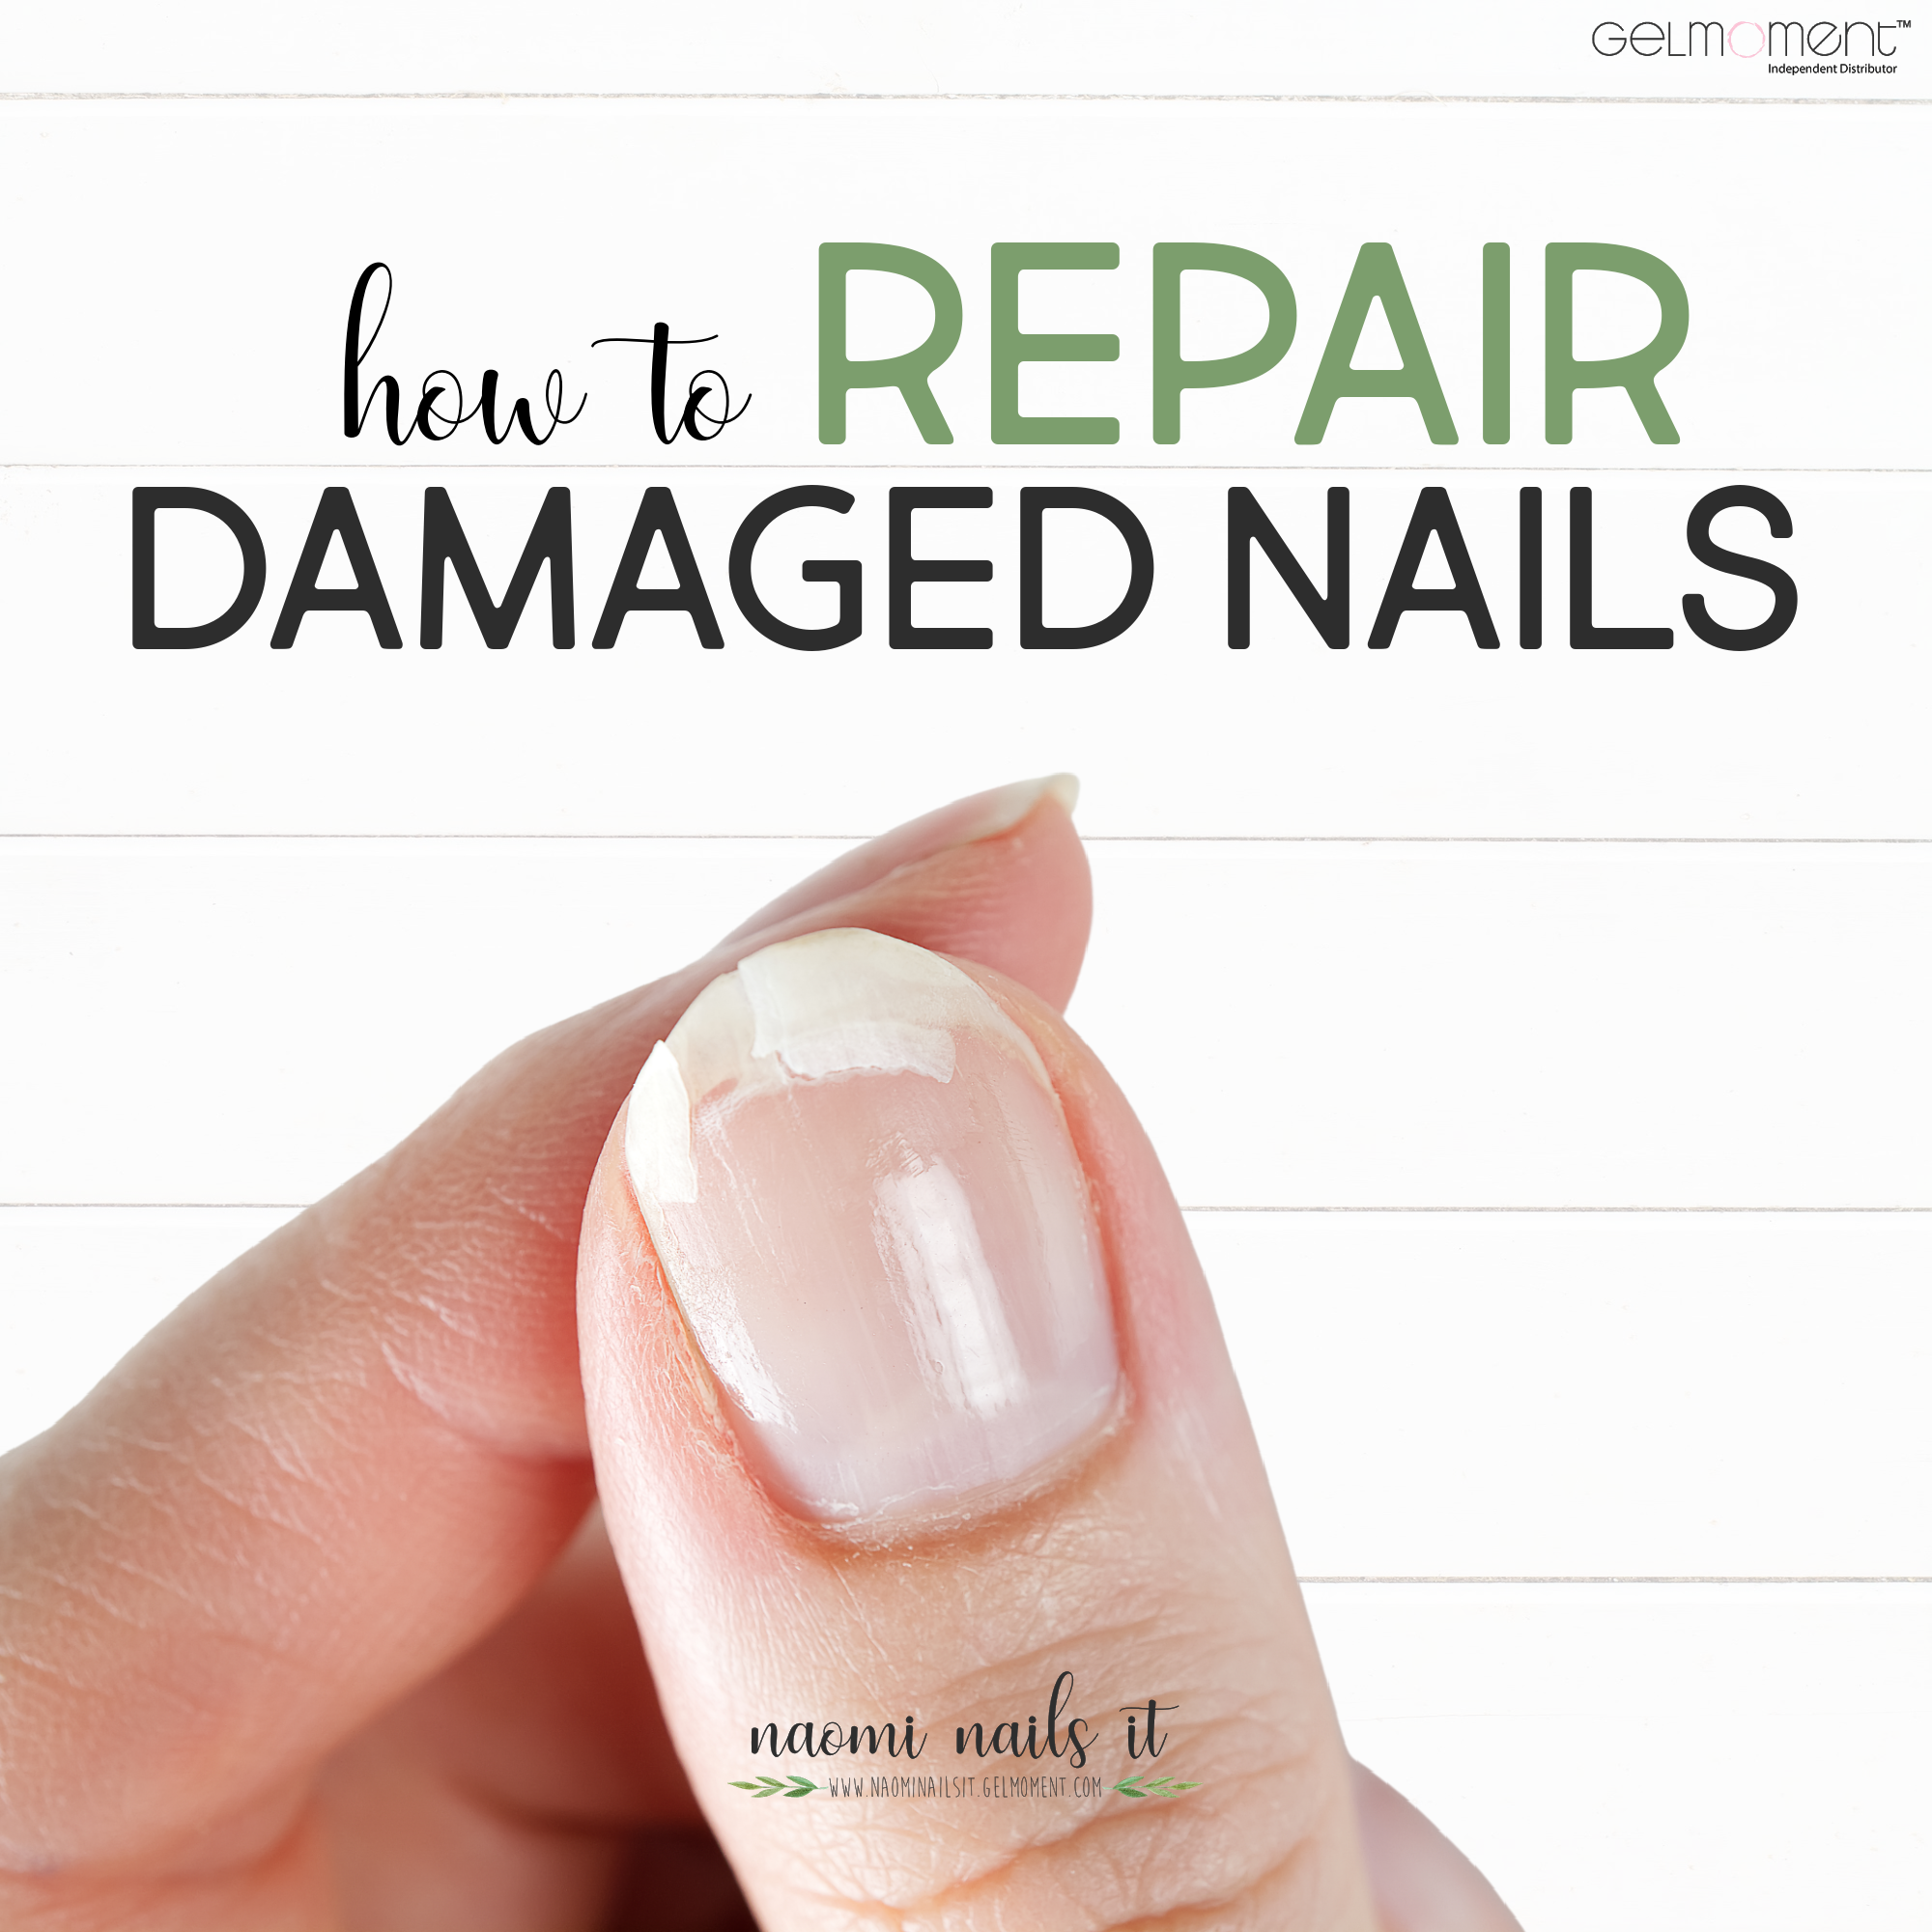 how to repair damaged nails, repair nail damage, nail repair, gelmoment, gel polish, naomi nails it, damaged nails, split nails, broken nails